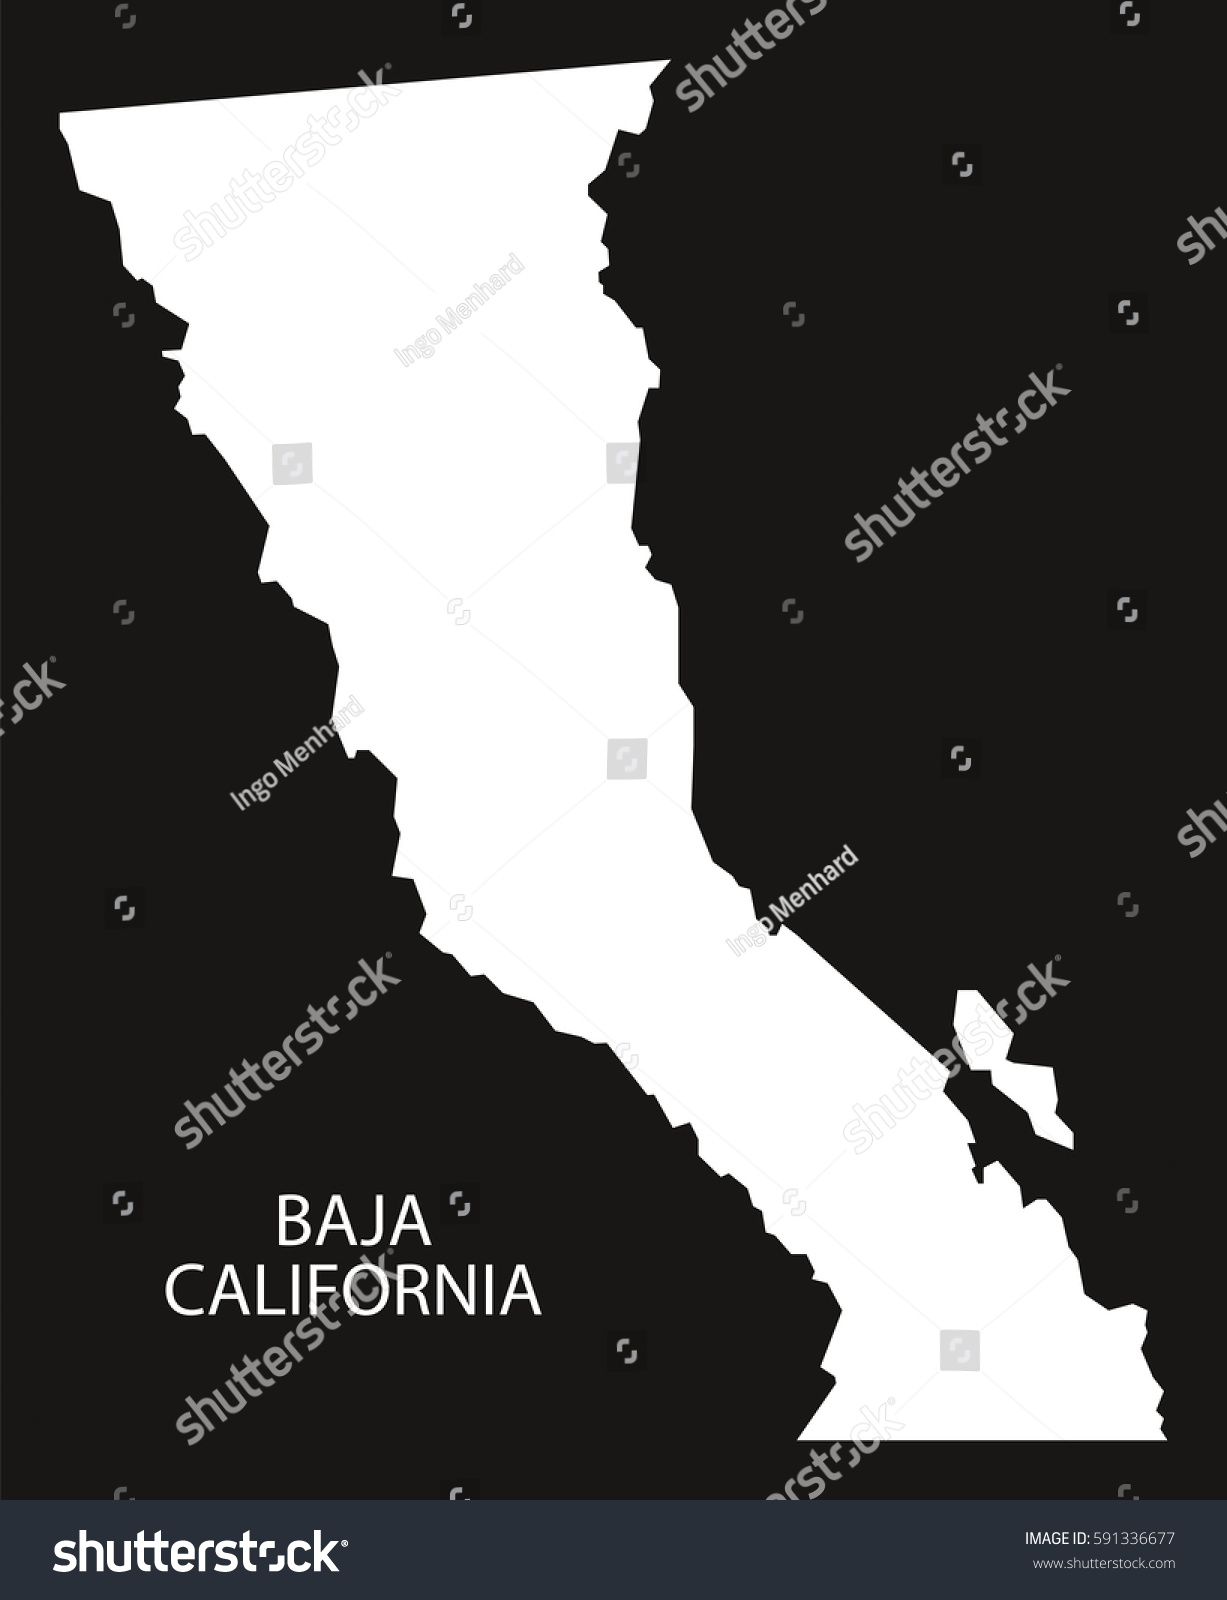 Baja California Mexico Map Black Inverted Royalty Free Stock Vector 591336677 5211